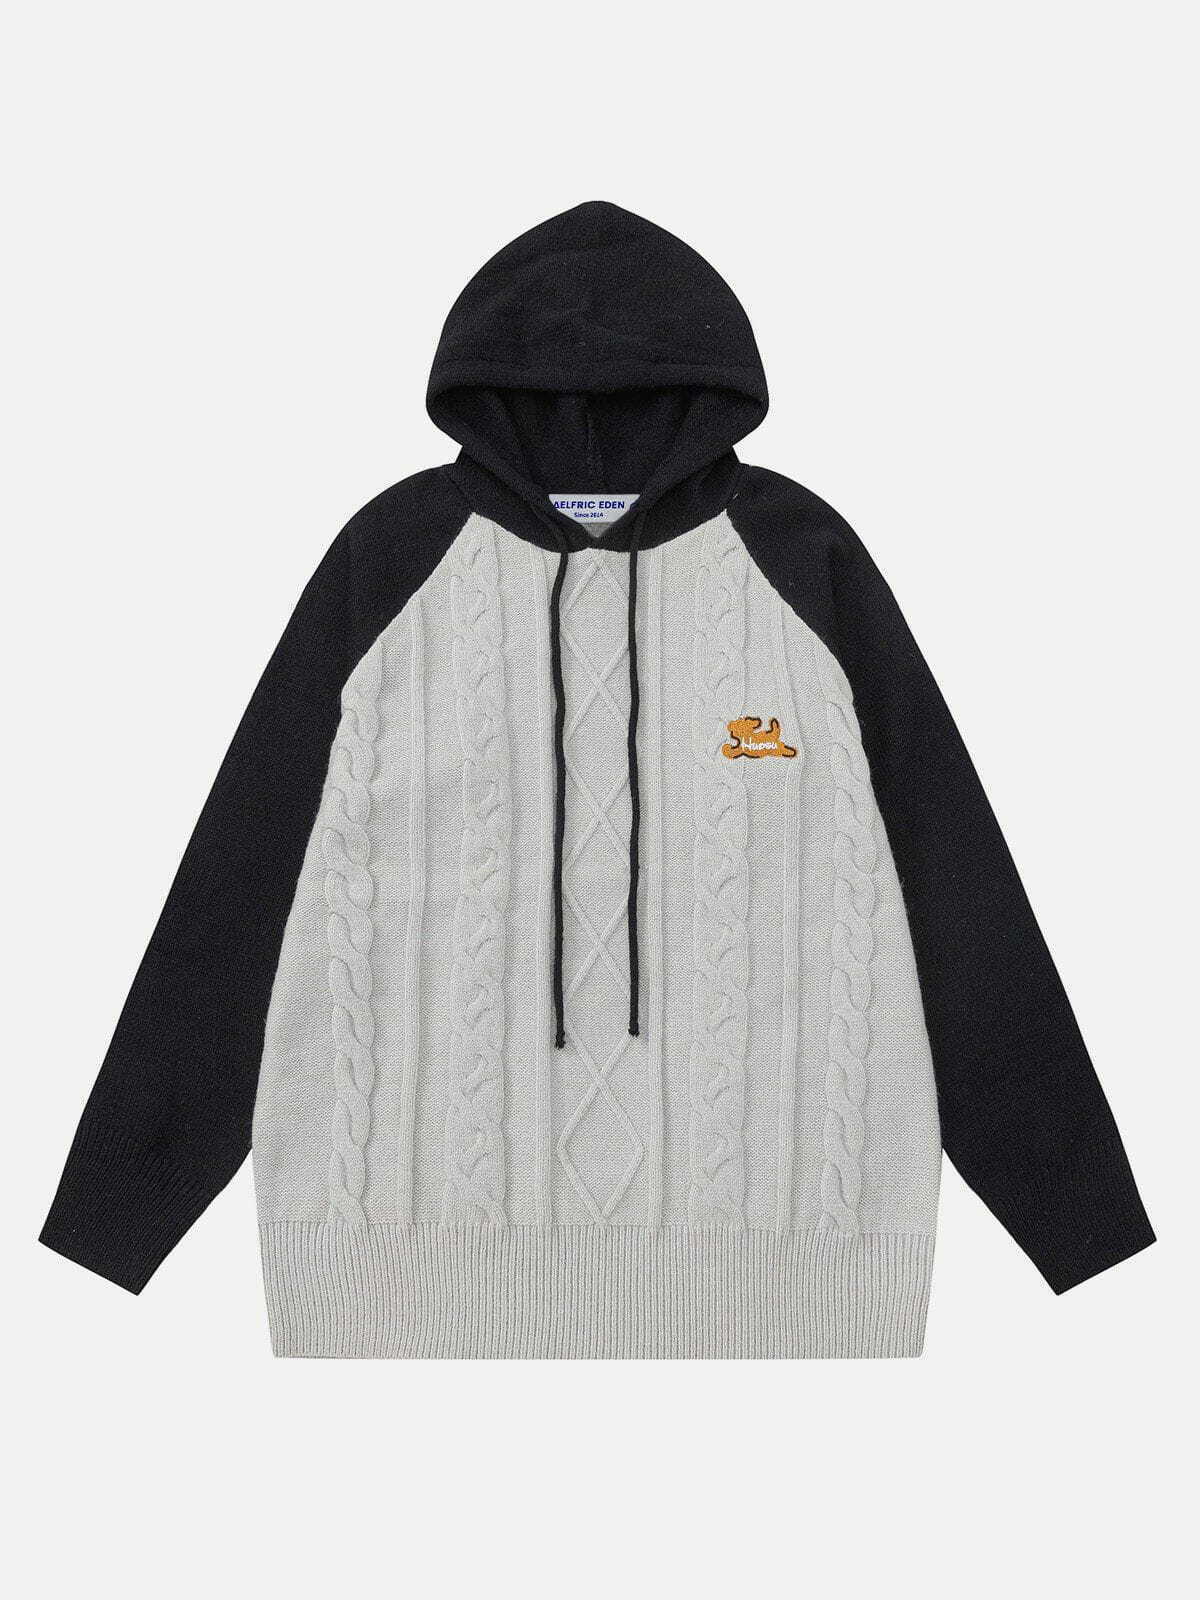 youthful patchwork hoodie with sleek sleeve twist 6731